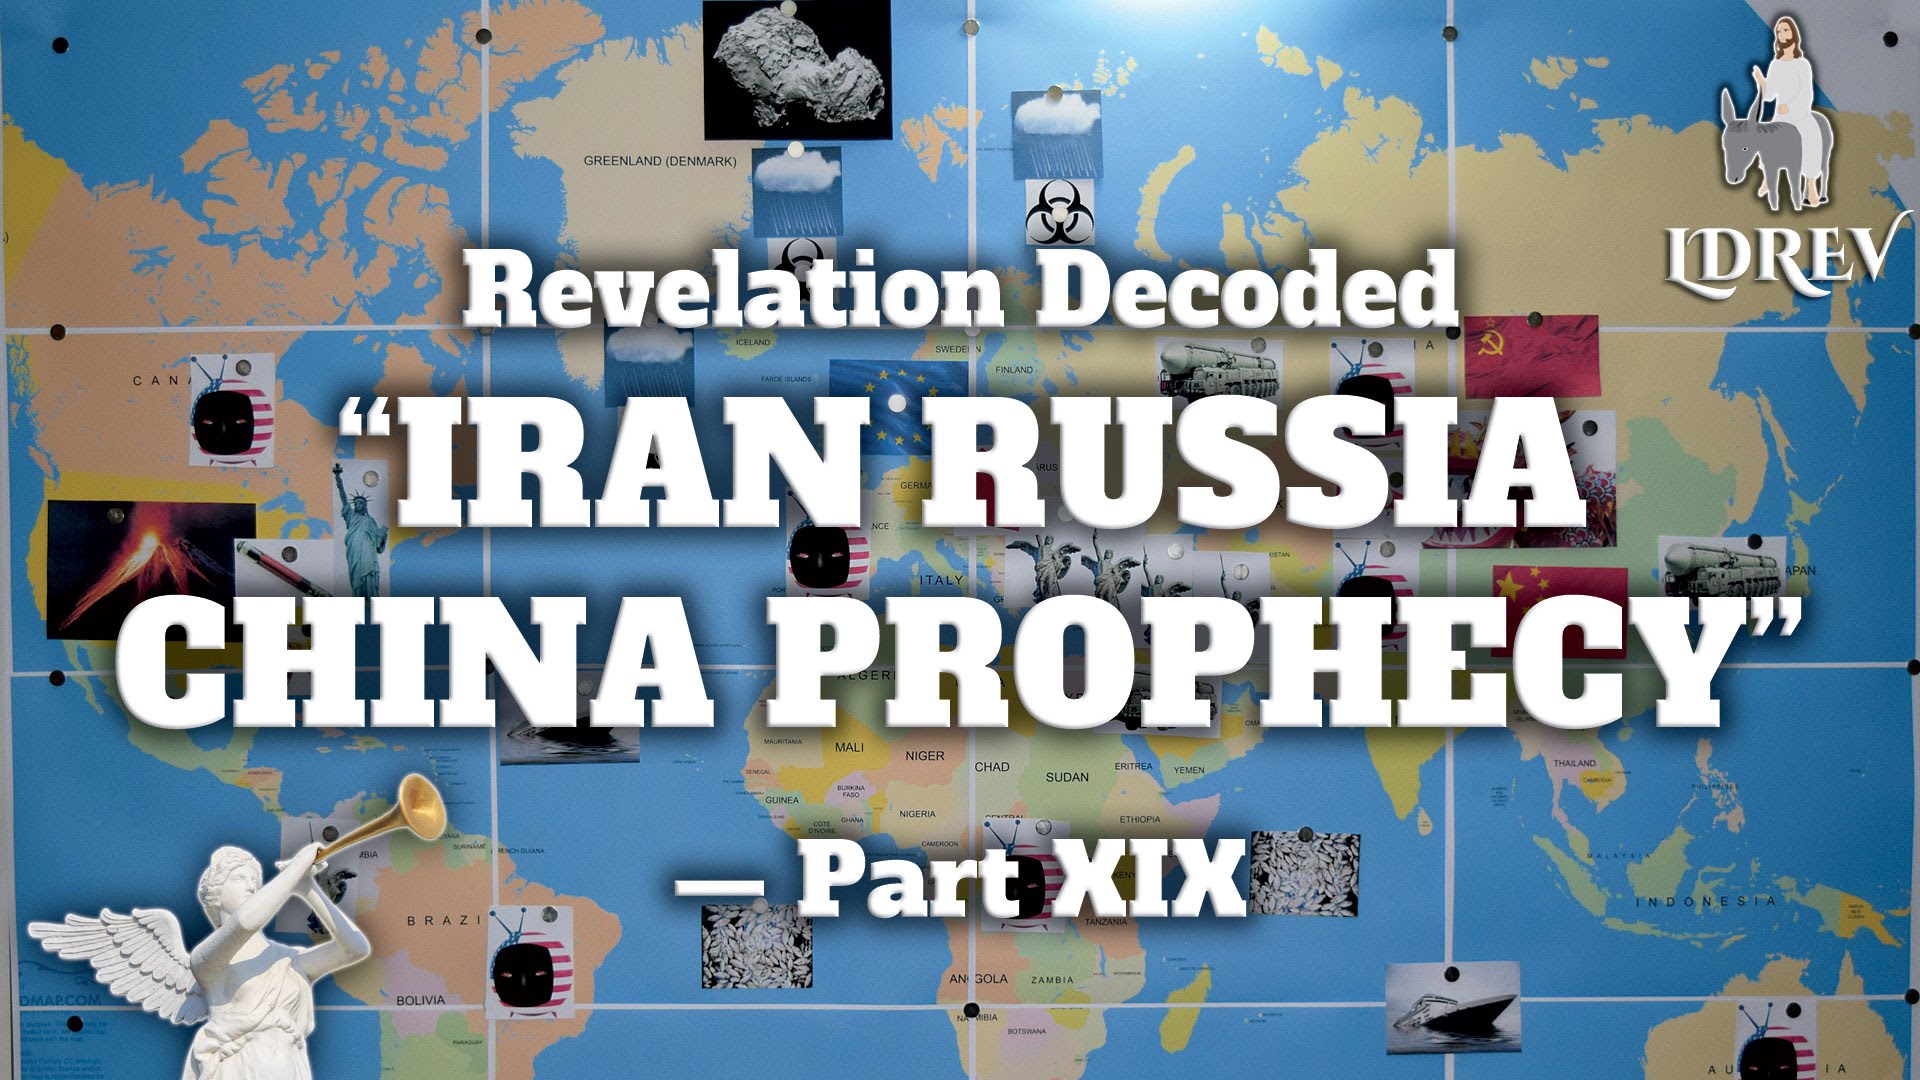 Iran, Russia, China Military Alliance Prophecy in 2016 UN World War 3